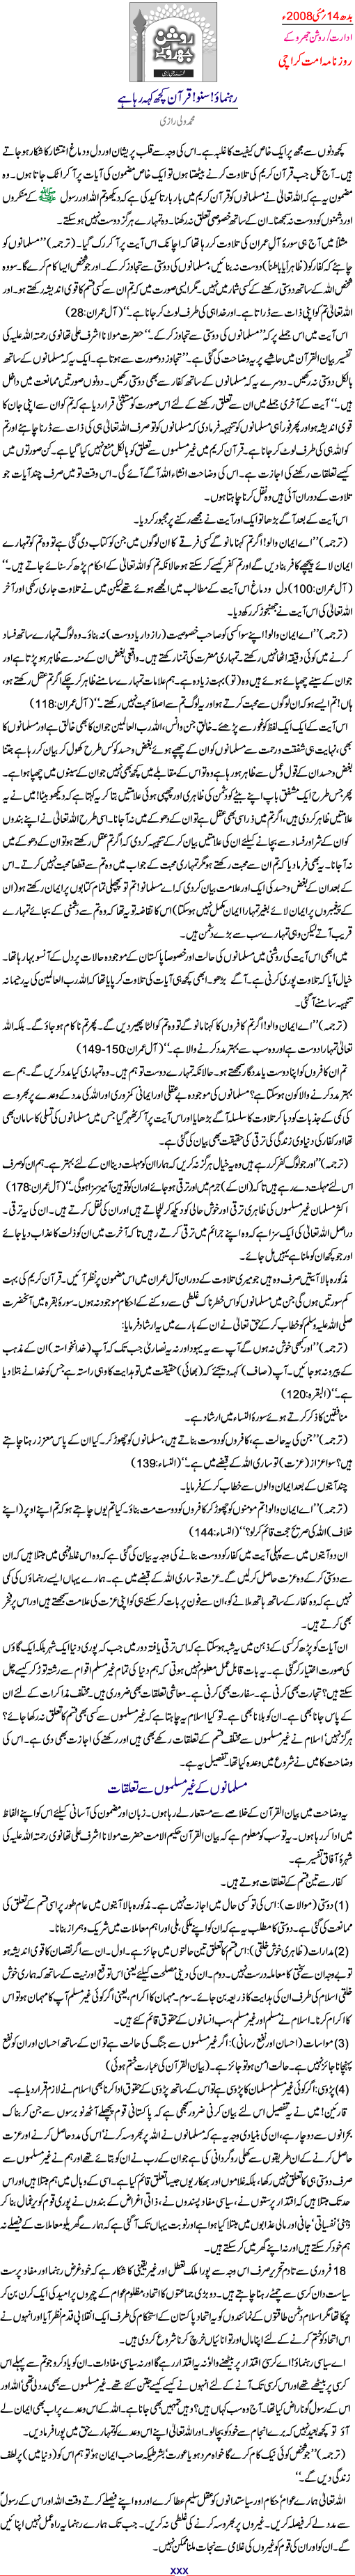 feature reports 2 - Quran Kuch Keh Raha Hai By Mohd wali Razi